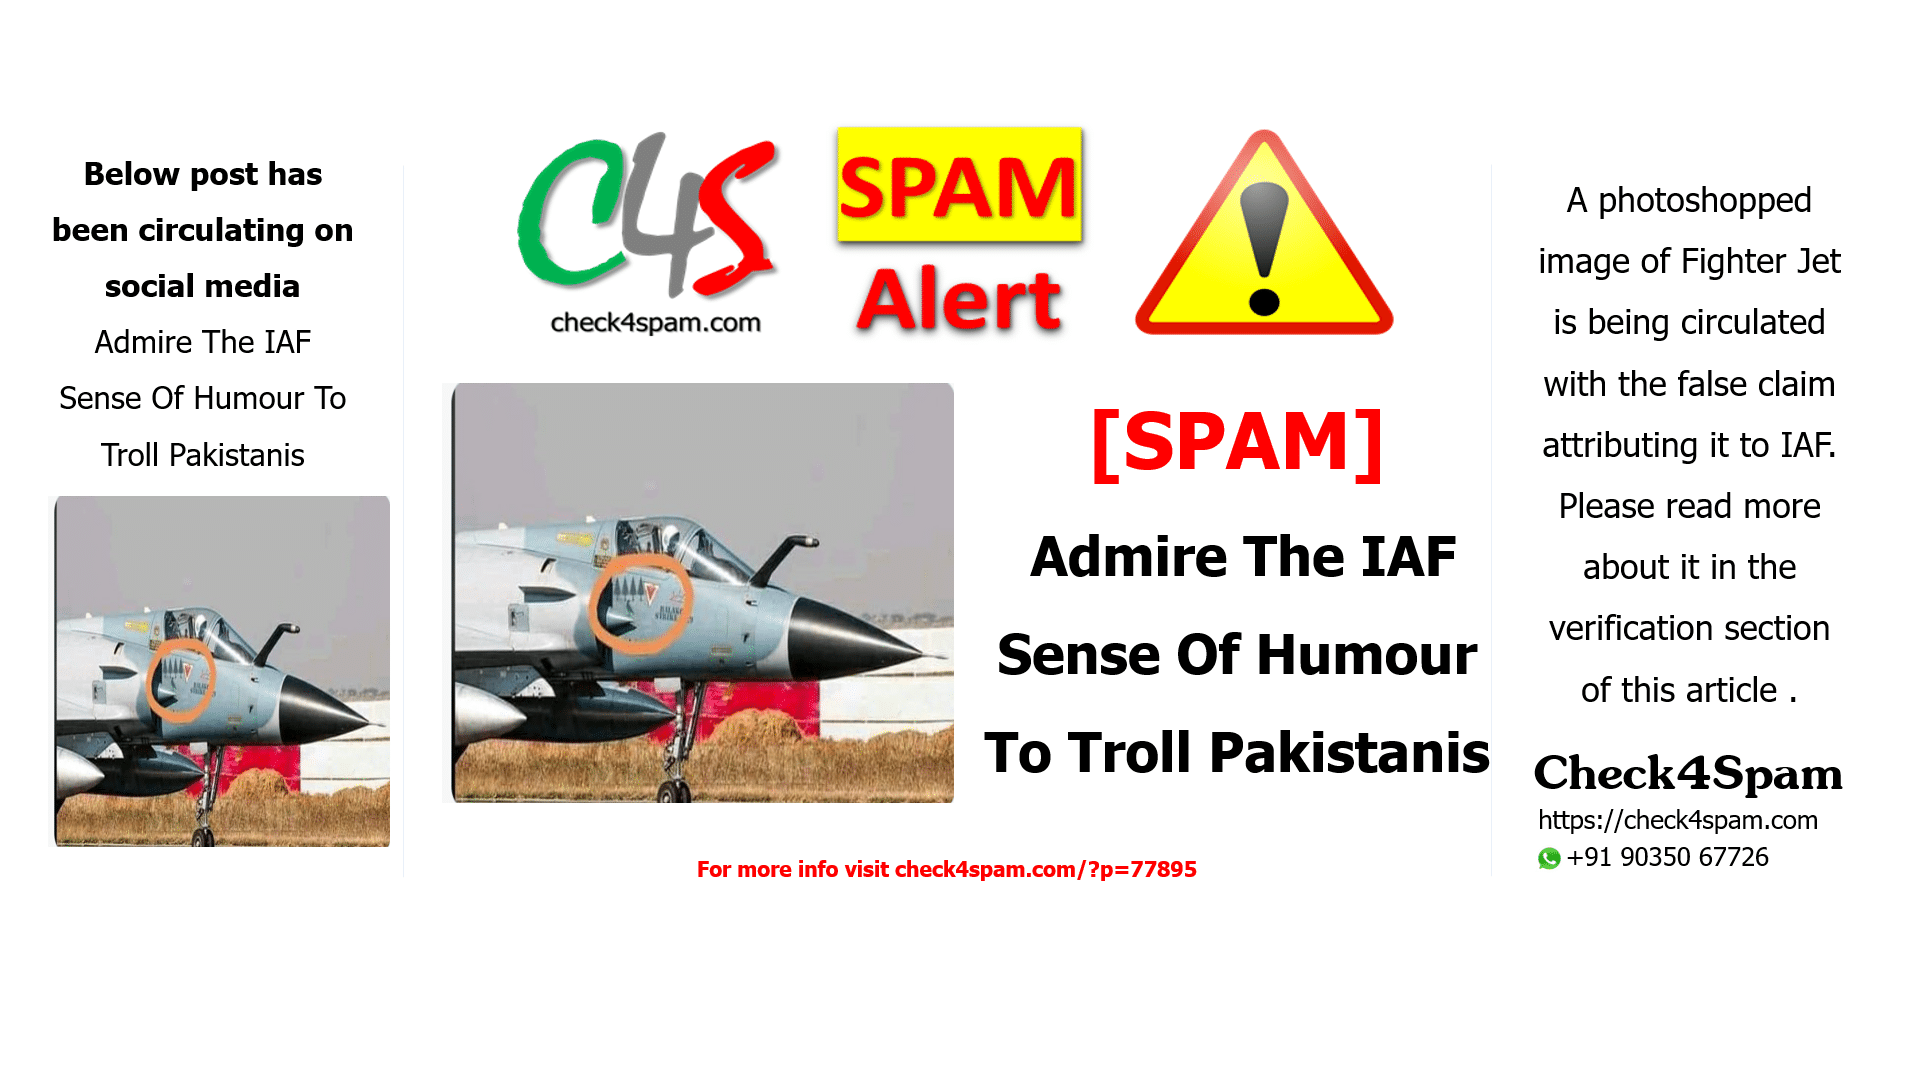 Admire The IAF Sense Of Humour To Troll Pakistanis